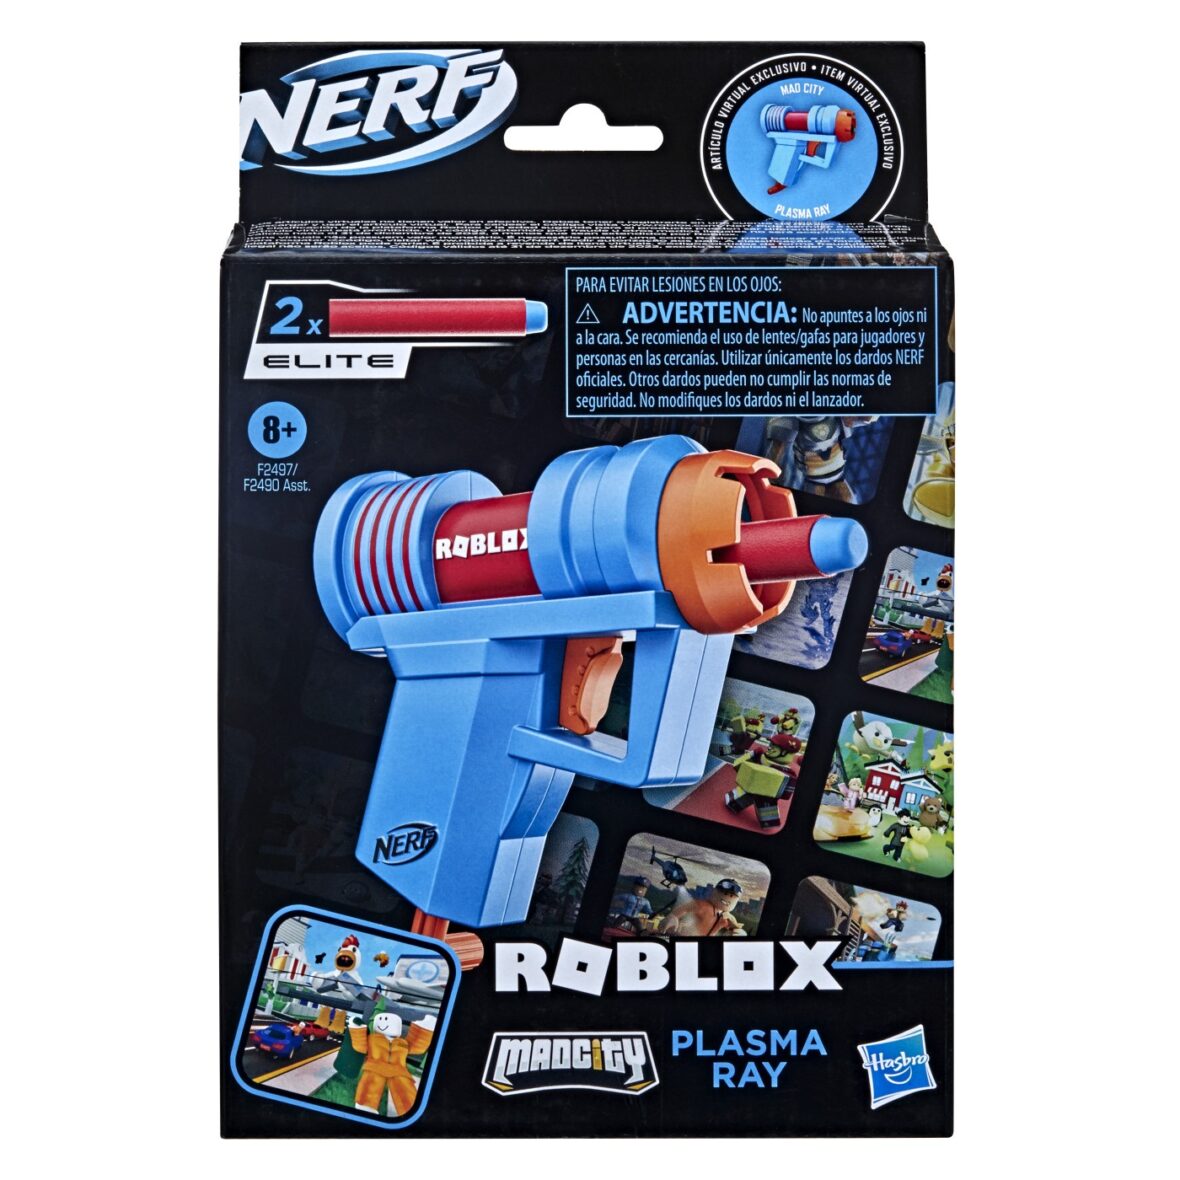 Nerf Blaster Roblox Microshots Mad City Plasma Ray